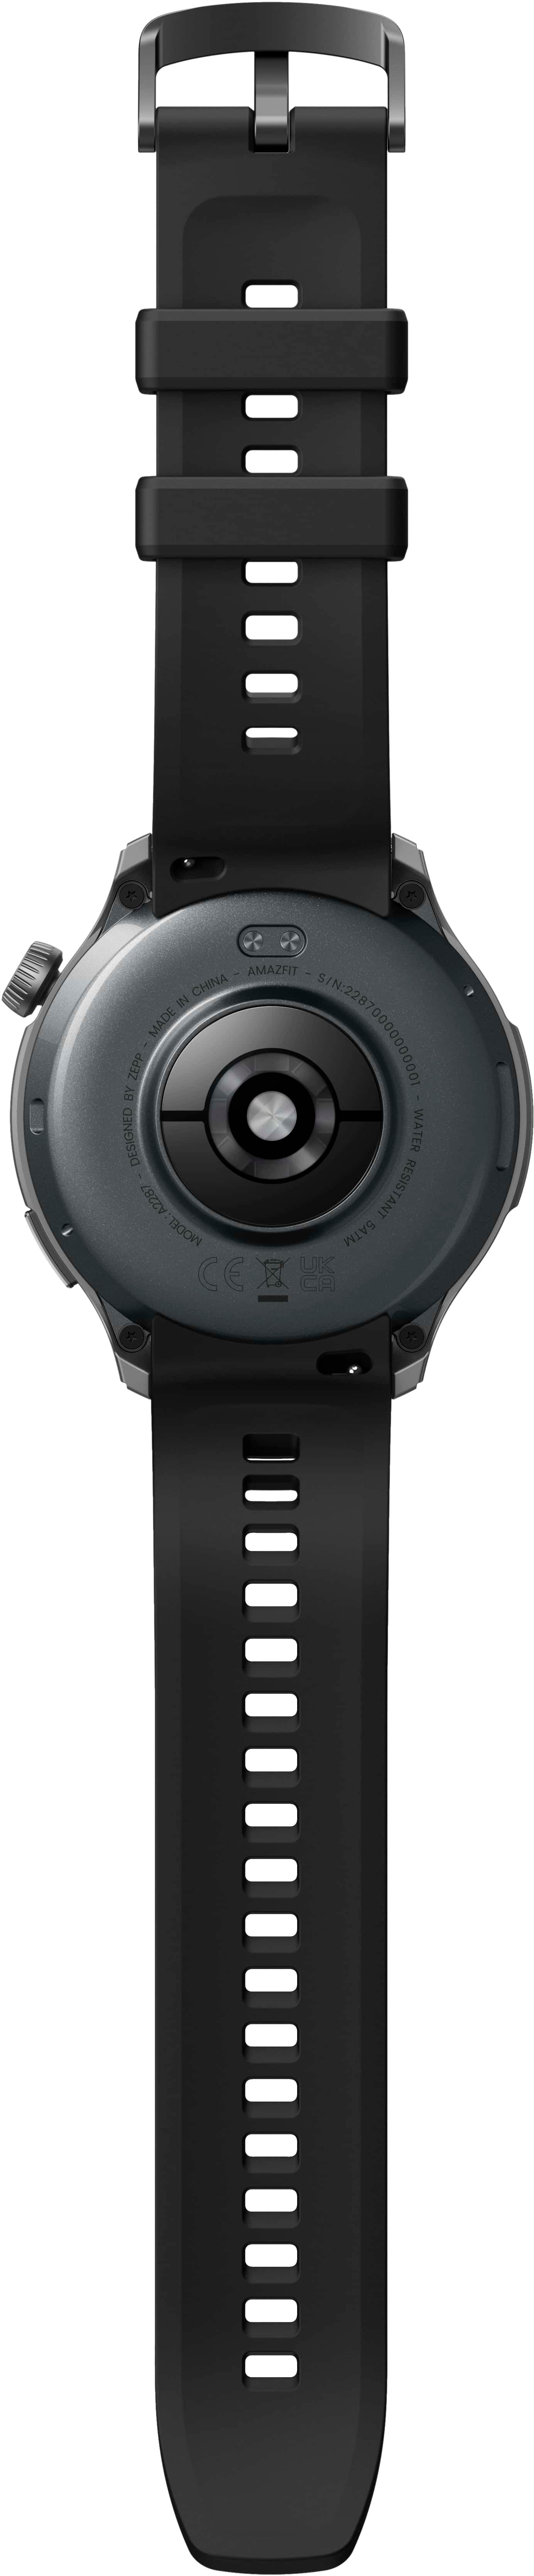 Amazfit Balance hands on: A sleek, stylish smartwatch with AI smarts